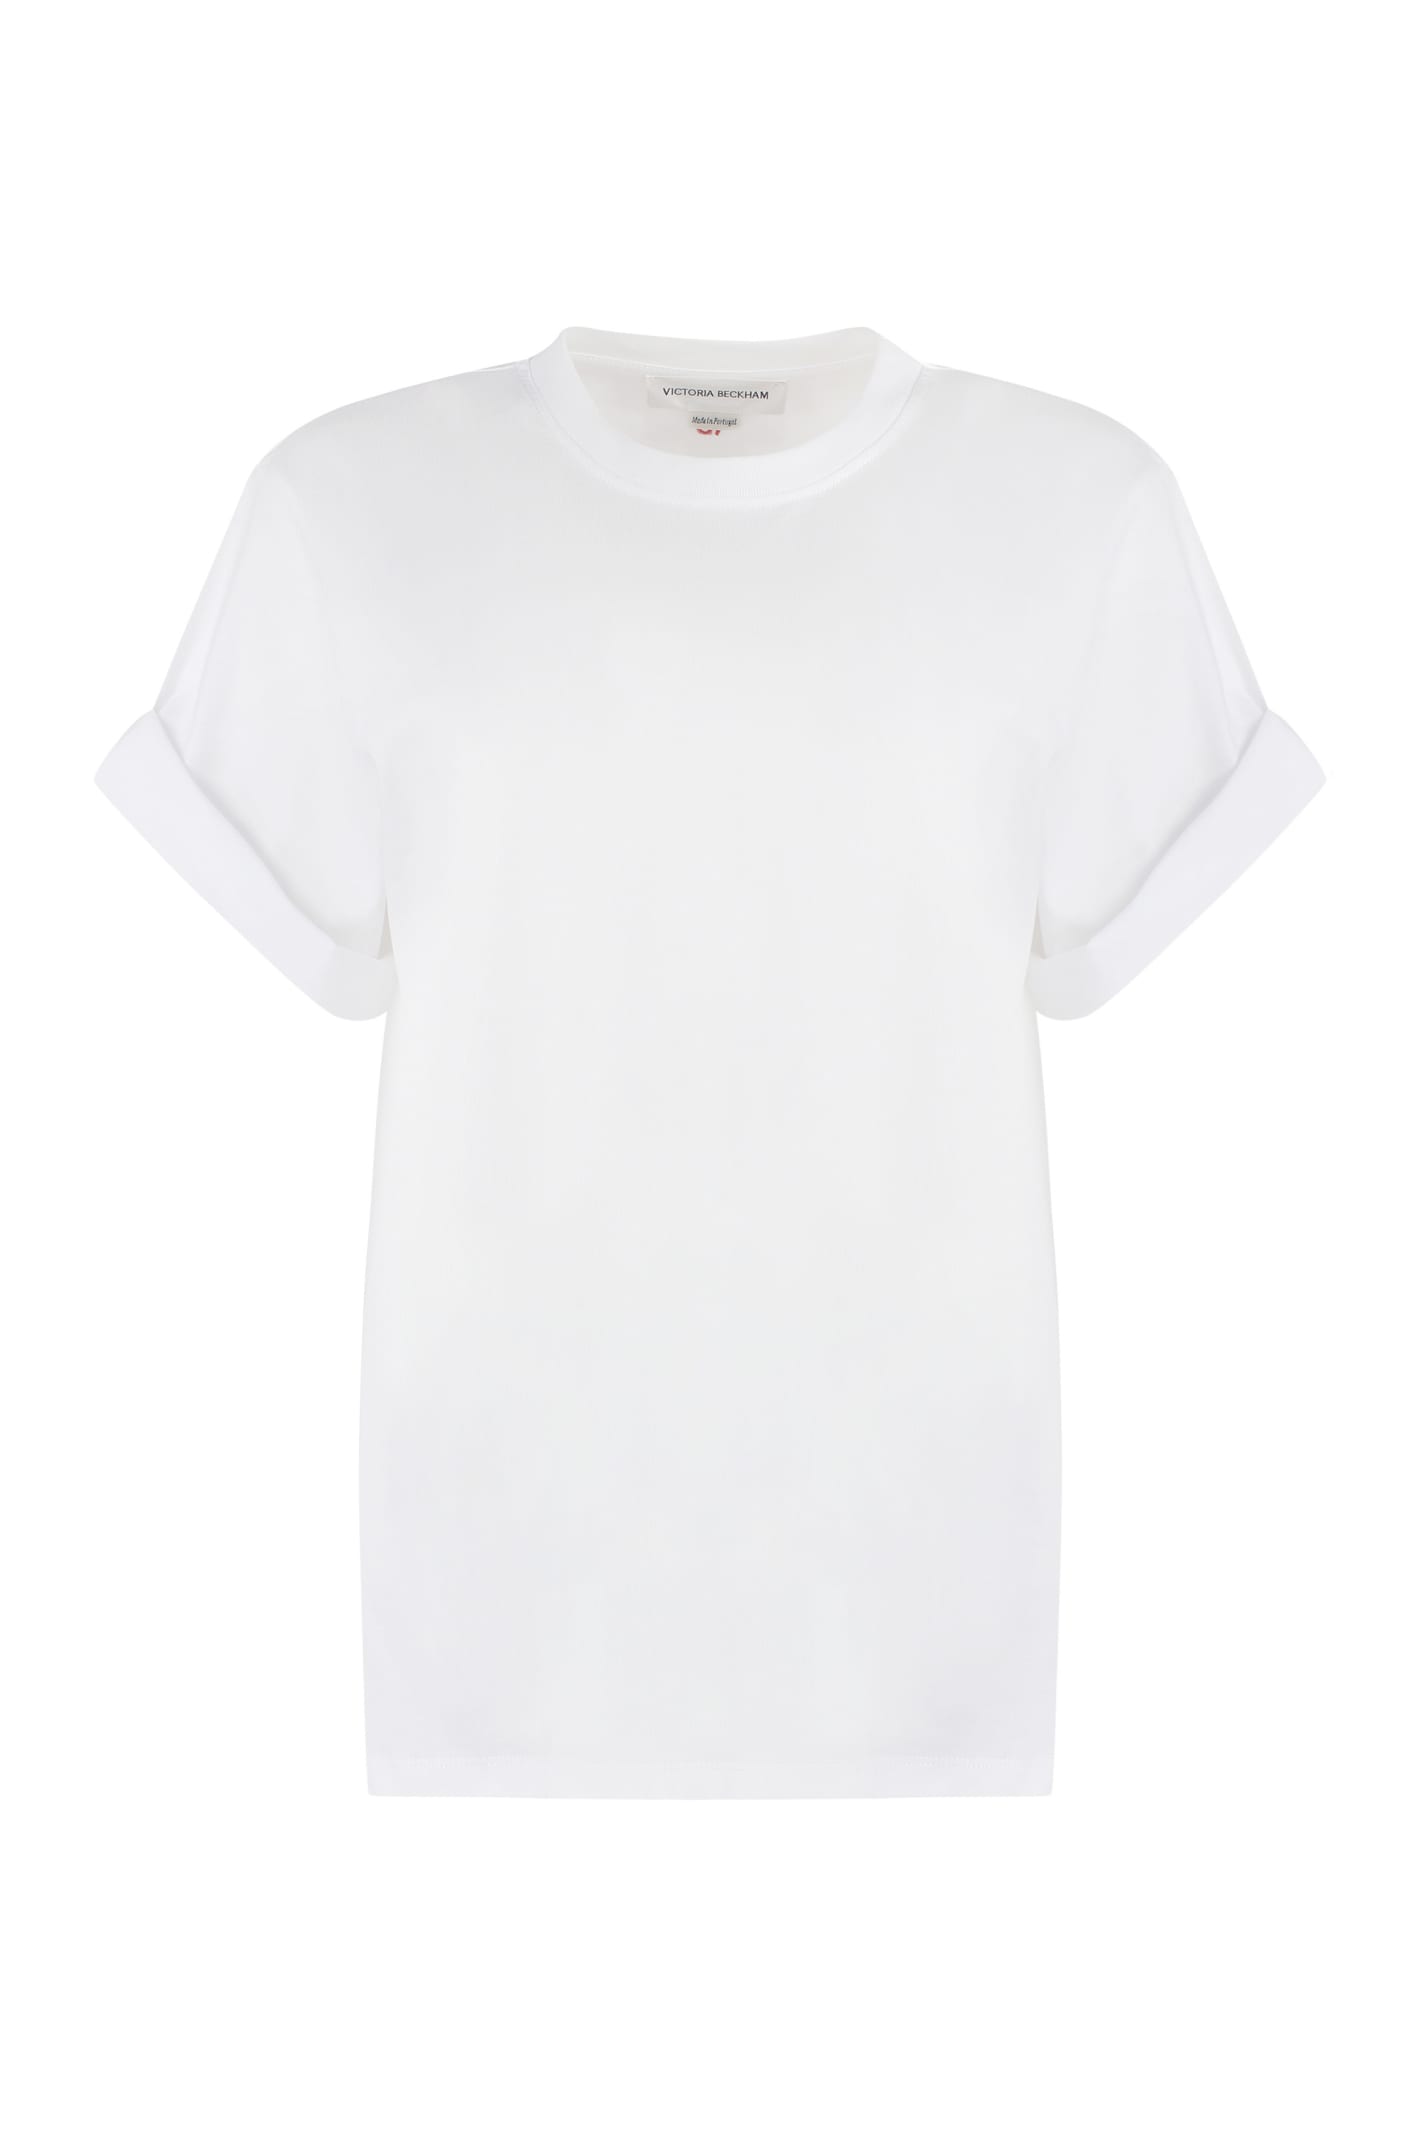 Victoria Beckham Cotton Crew-neck T-shirt